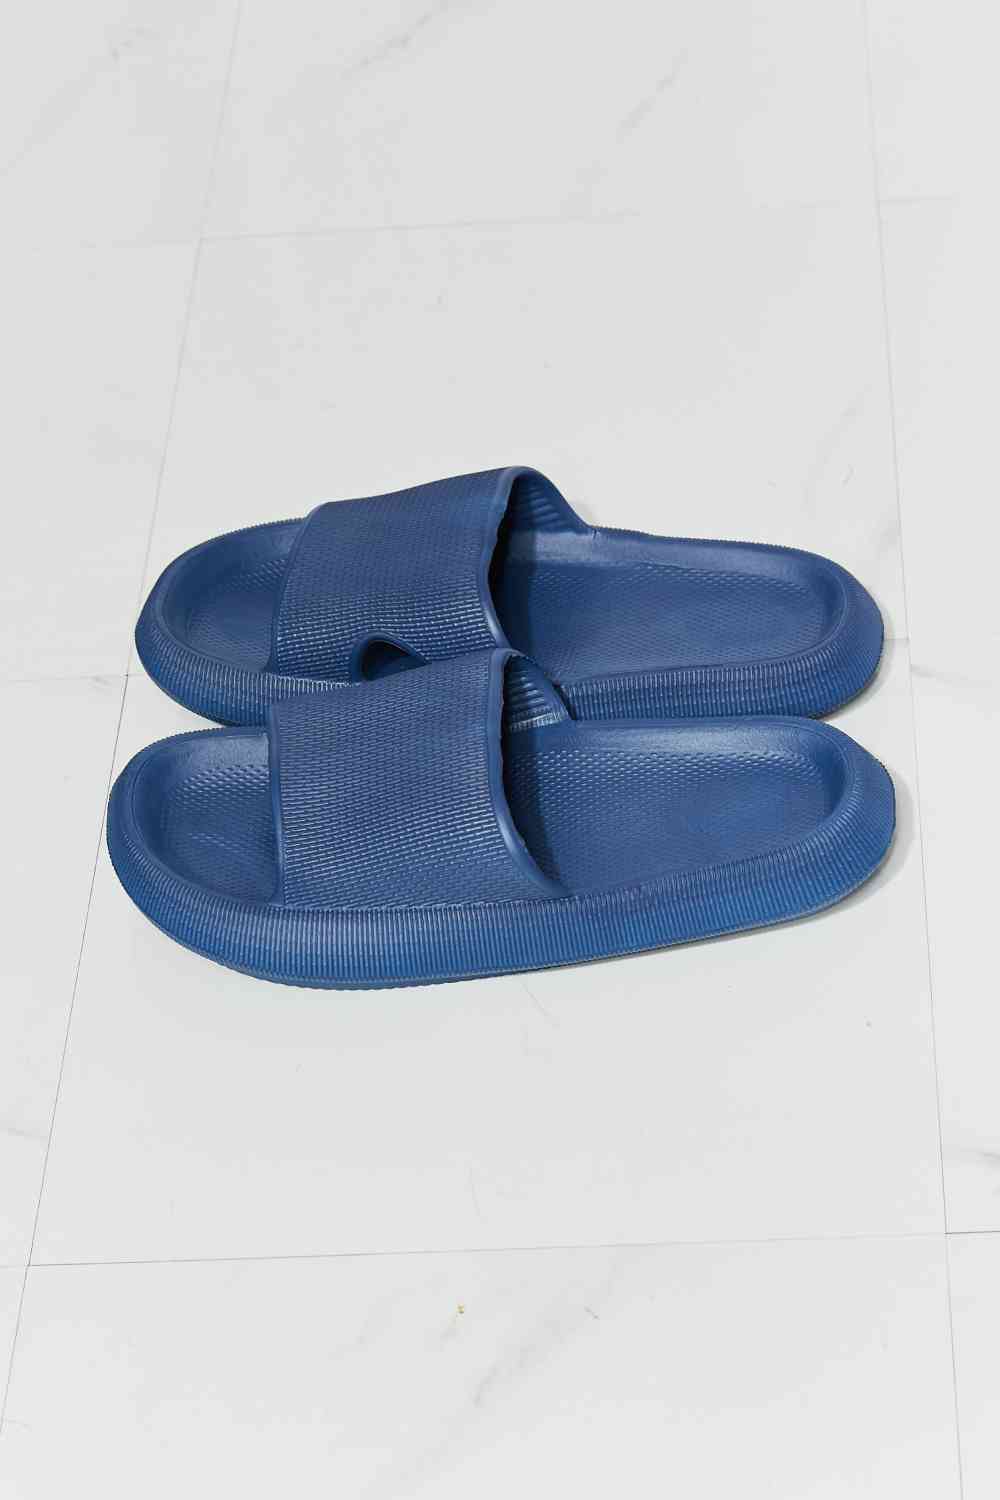 Navy Blue Open Toe Slide